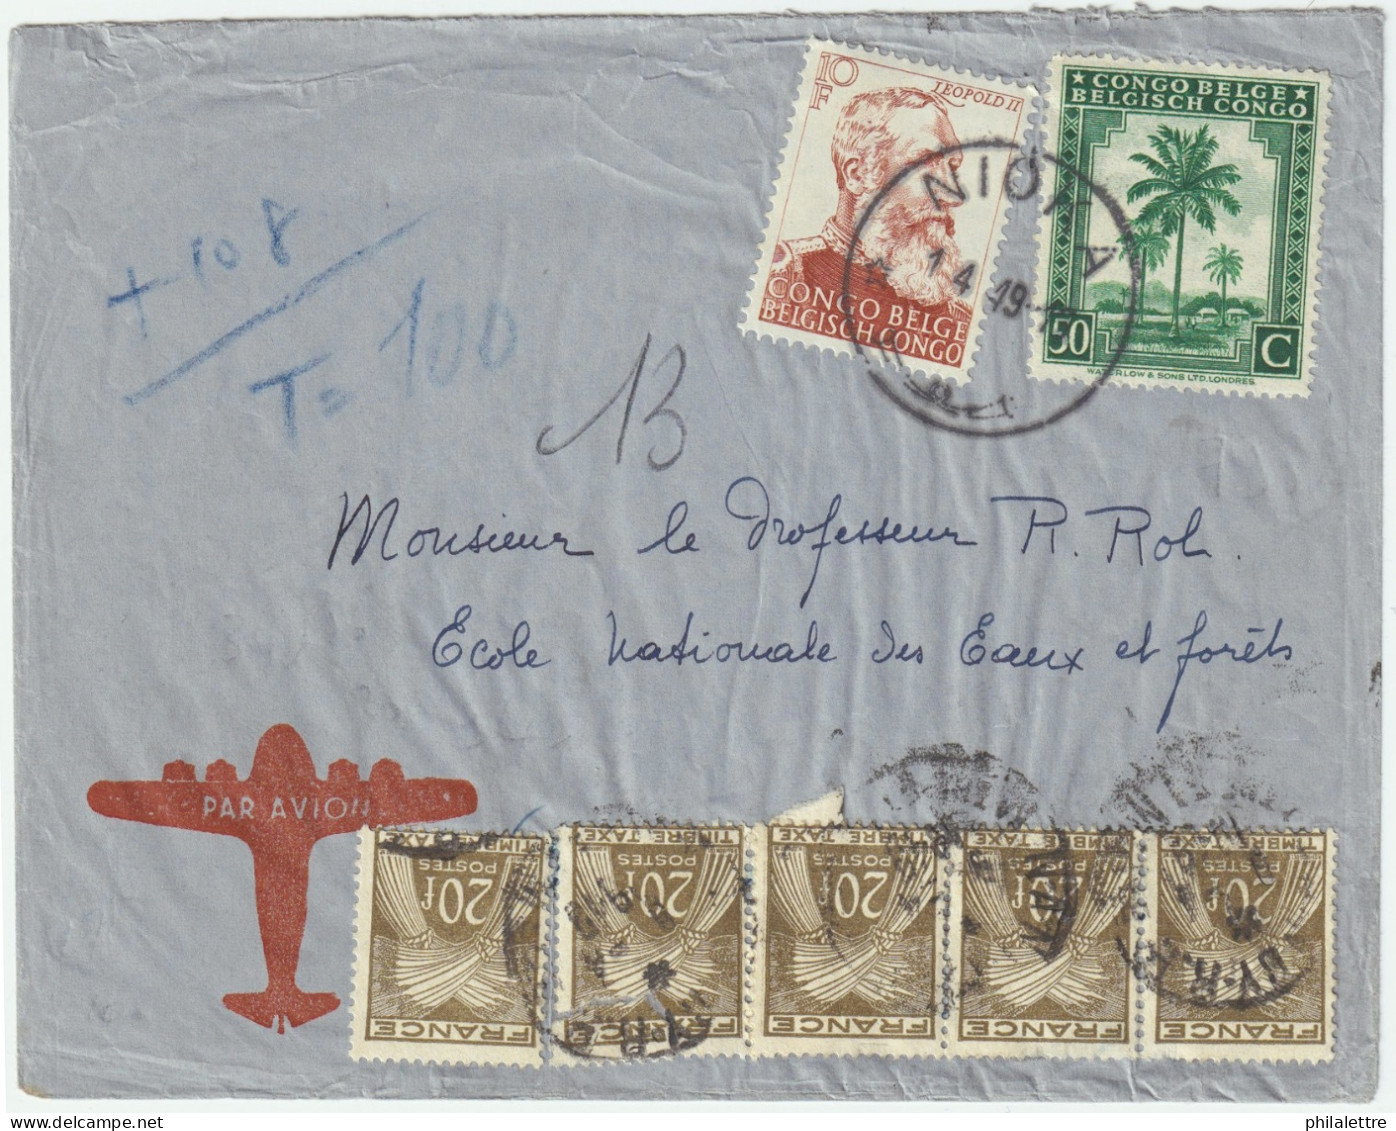 CONGO BELGE Pour La FRANCE - 1949 LSC AVION Affranchie 10fr50c From NIOKA To NANCY, Taxée 100fr (5x20fr Type Gerbes) - 1859-1959 Storia Postale